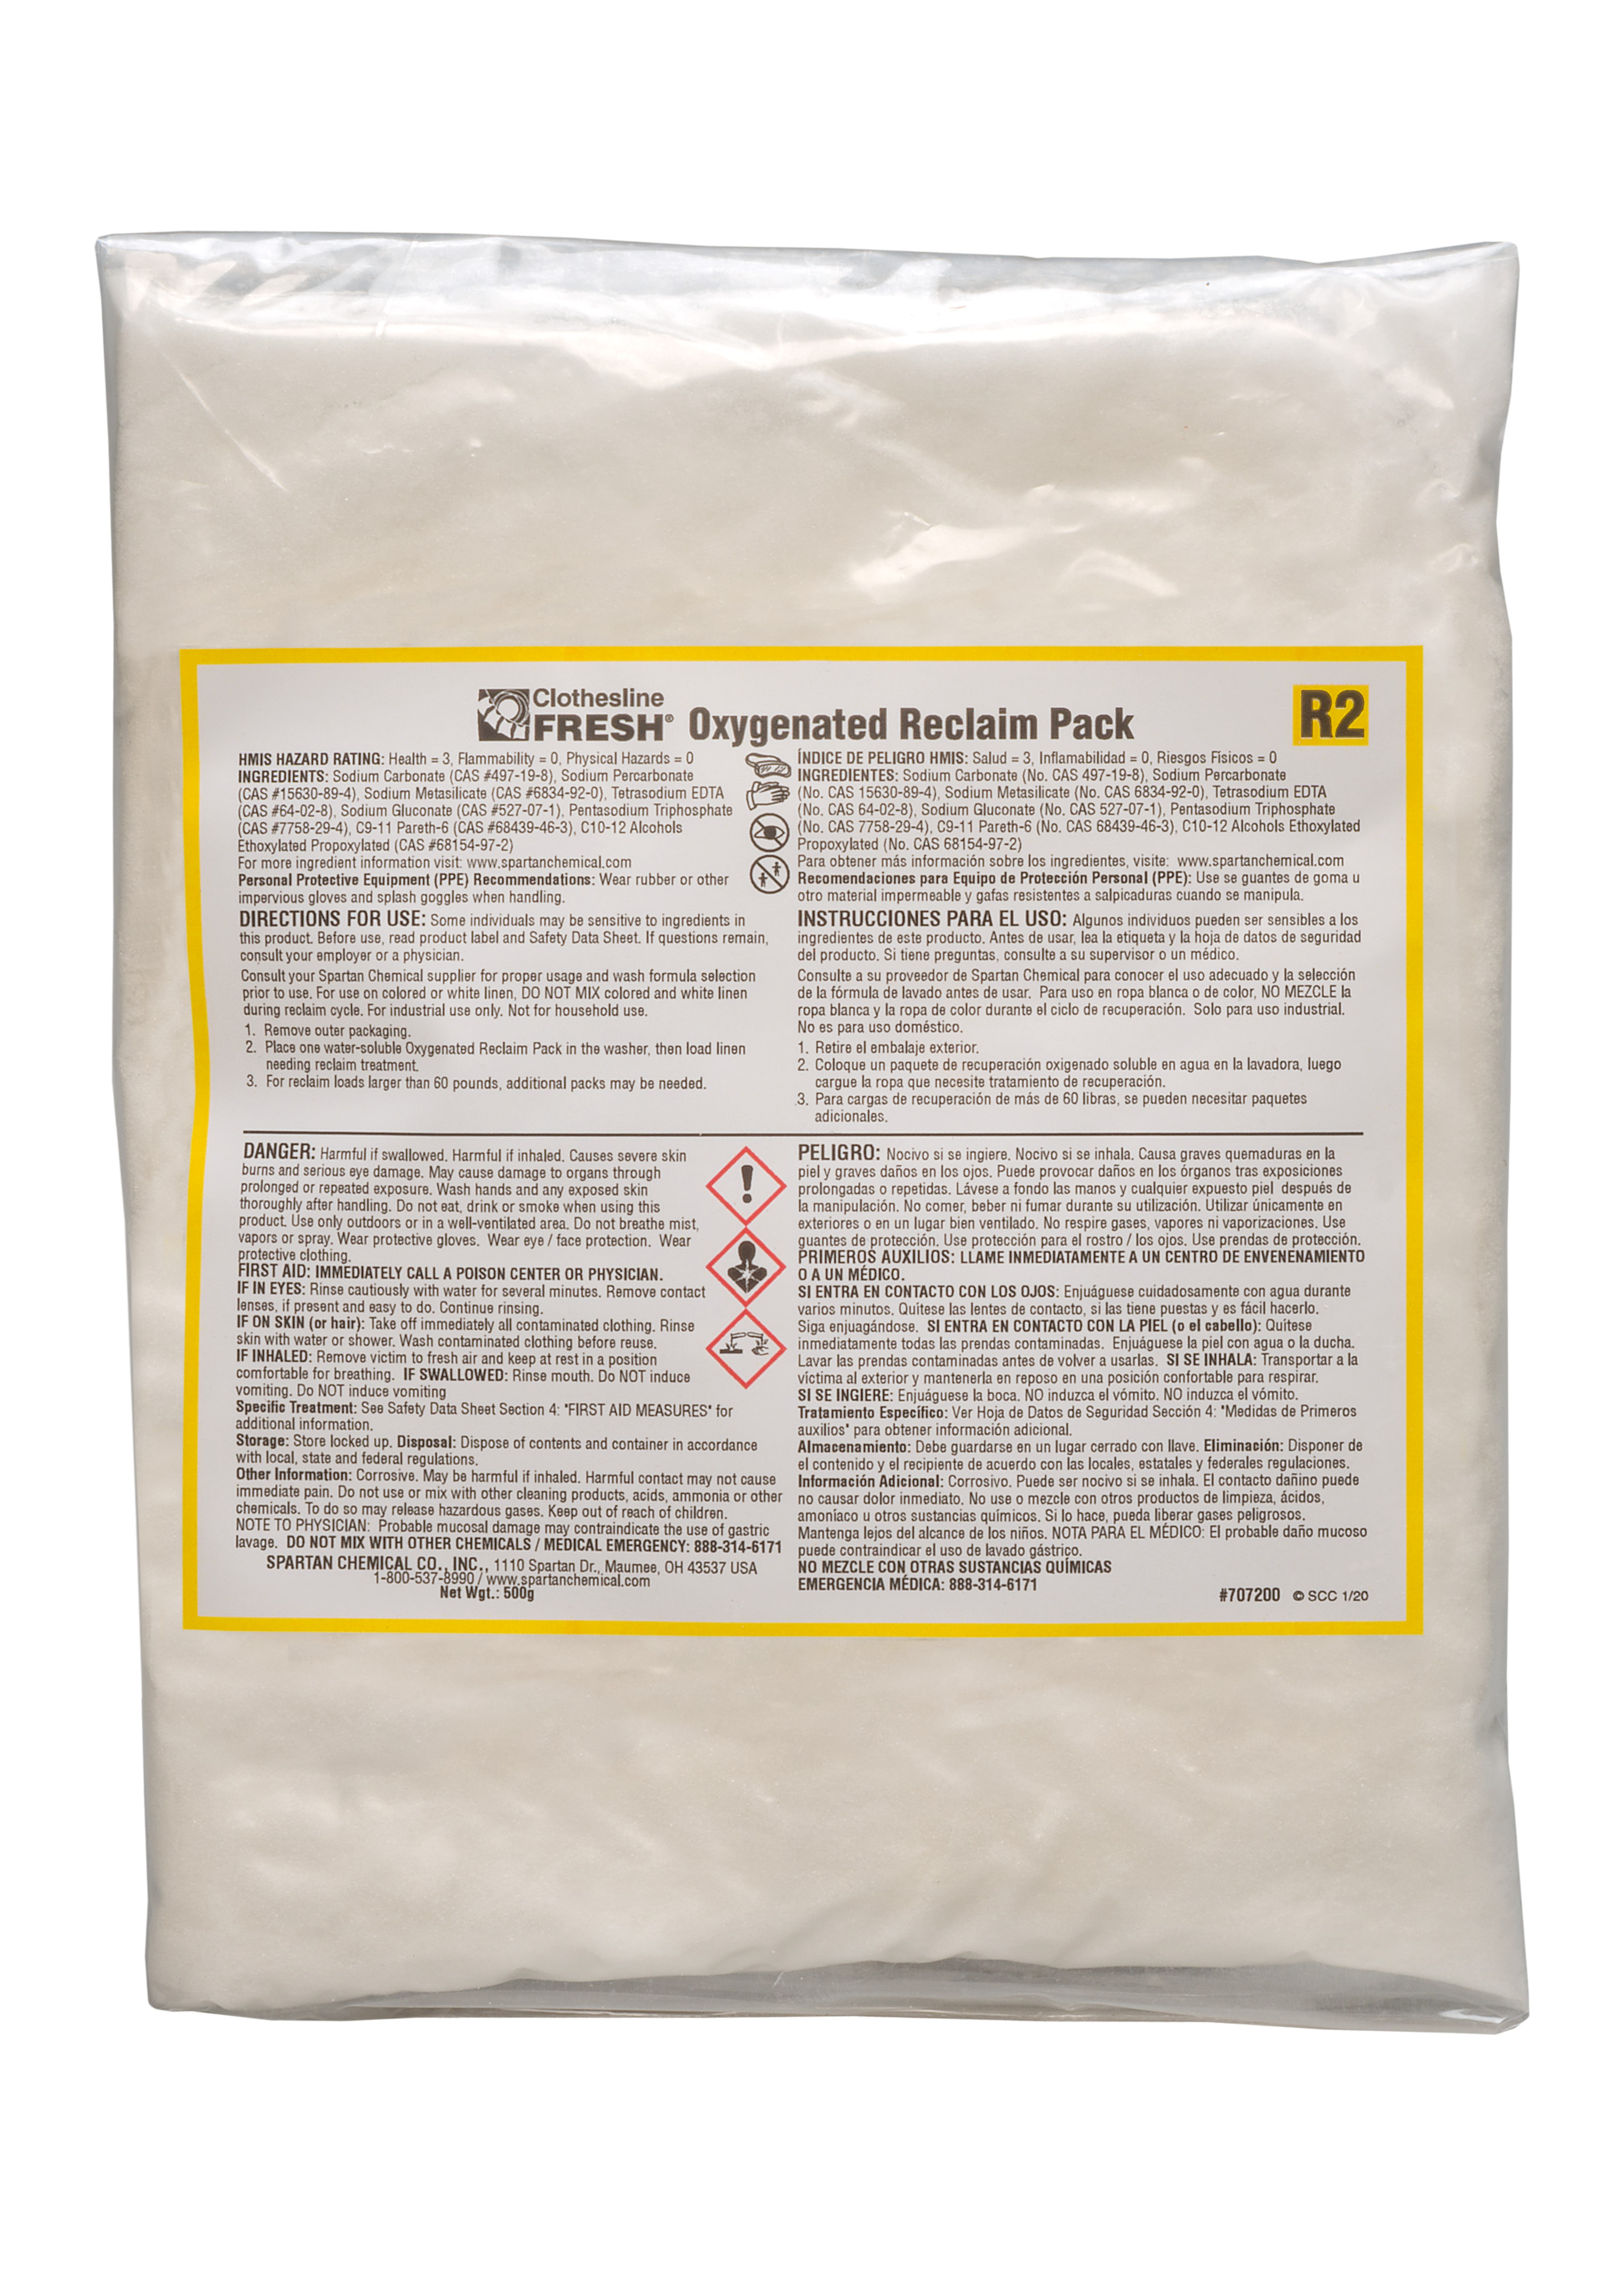 Spartan Chemical Company Clothesline Fresh Oxygenated Reclaim Pack R2, 10 ct. 500 gram